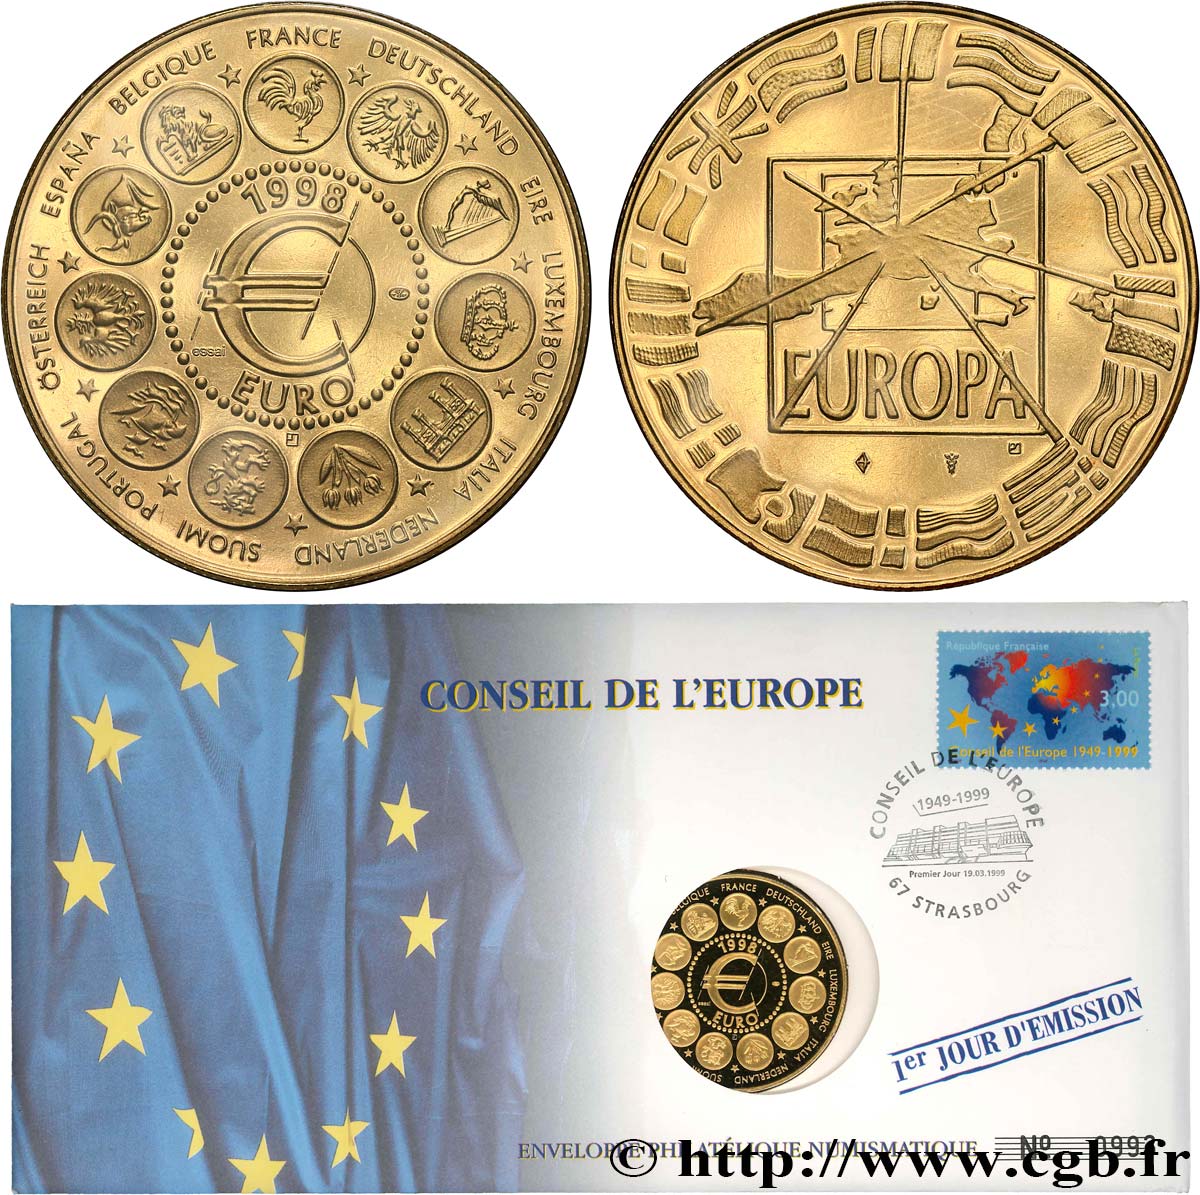 FUNFTE FRANZOSISCHE REPUBLIK Enveloppe “timbre médaille”, Euro Europa fST